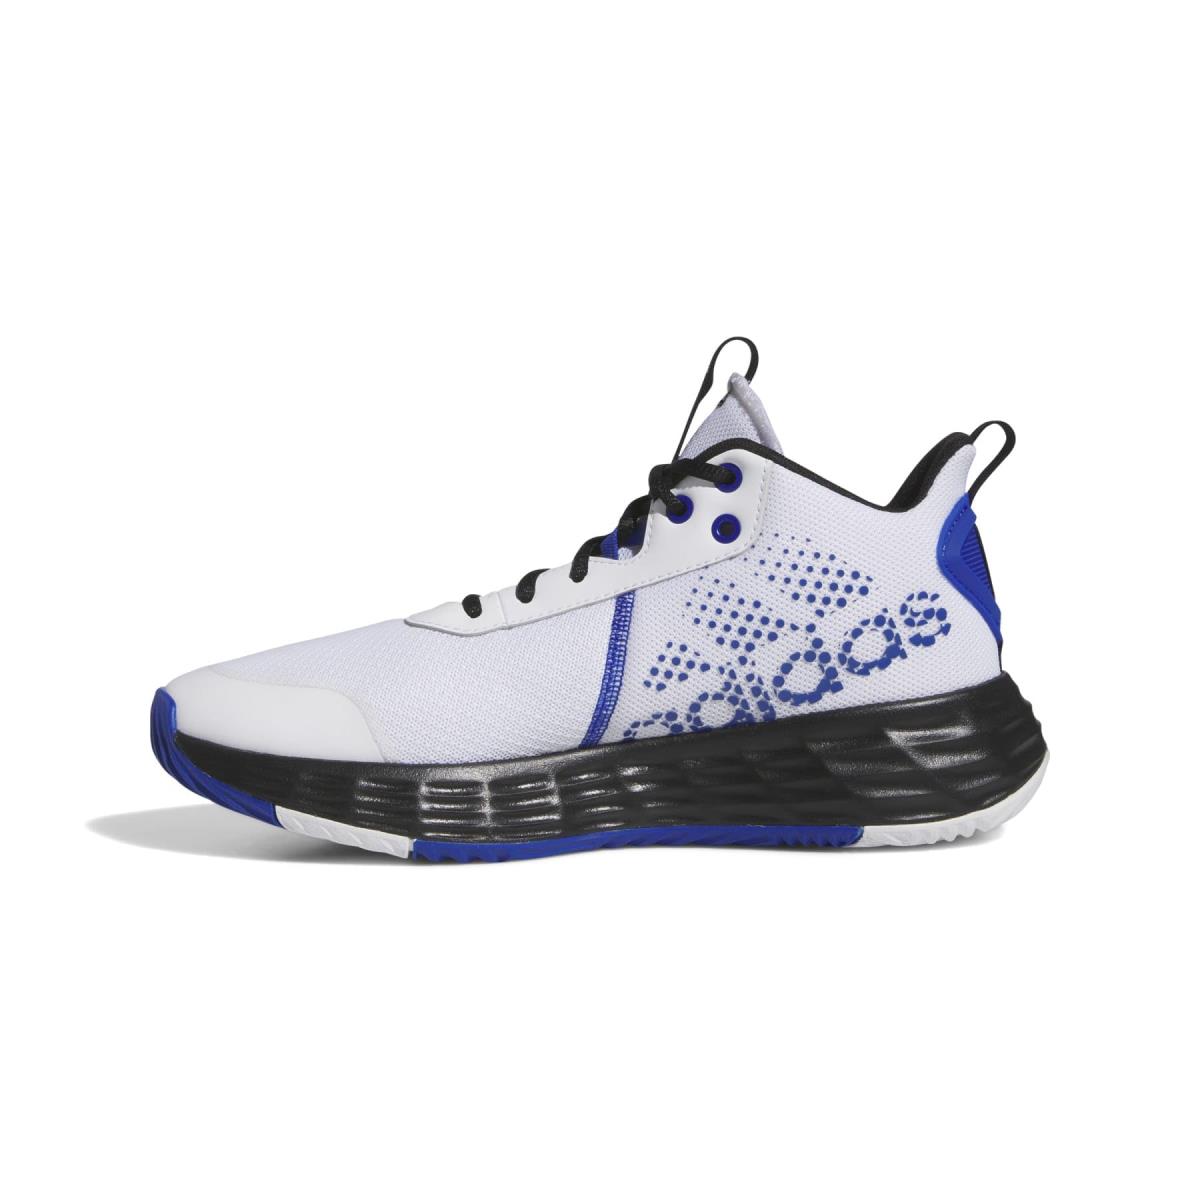 Adidas Men`s Ownthegame Basketball Shoe White/Team Royal Blue/Core Black